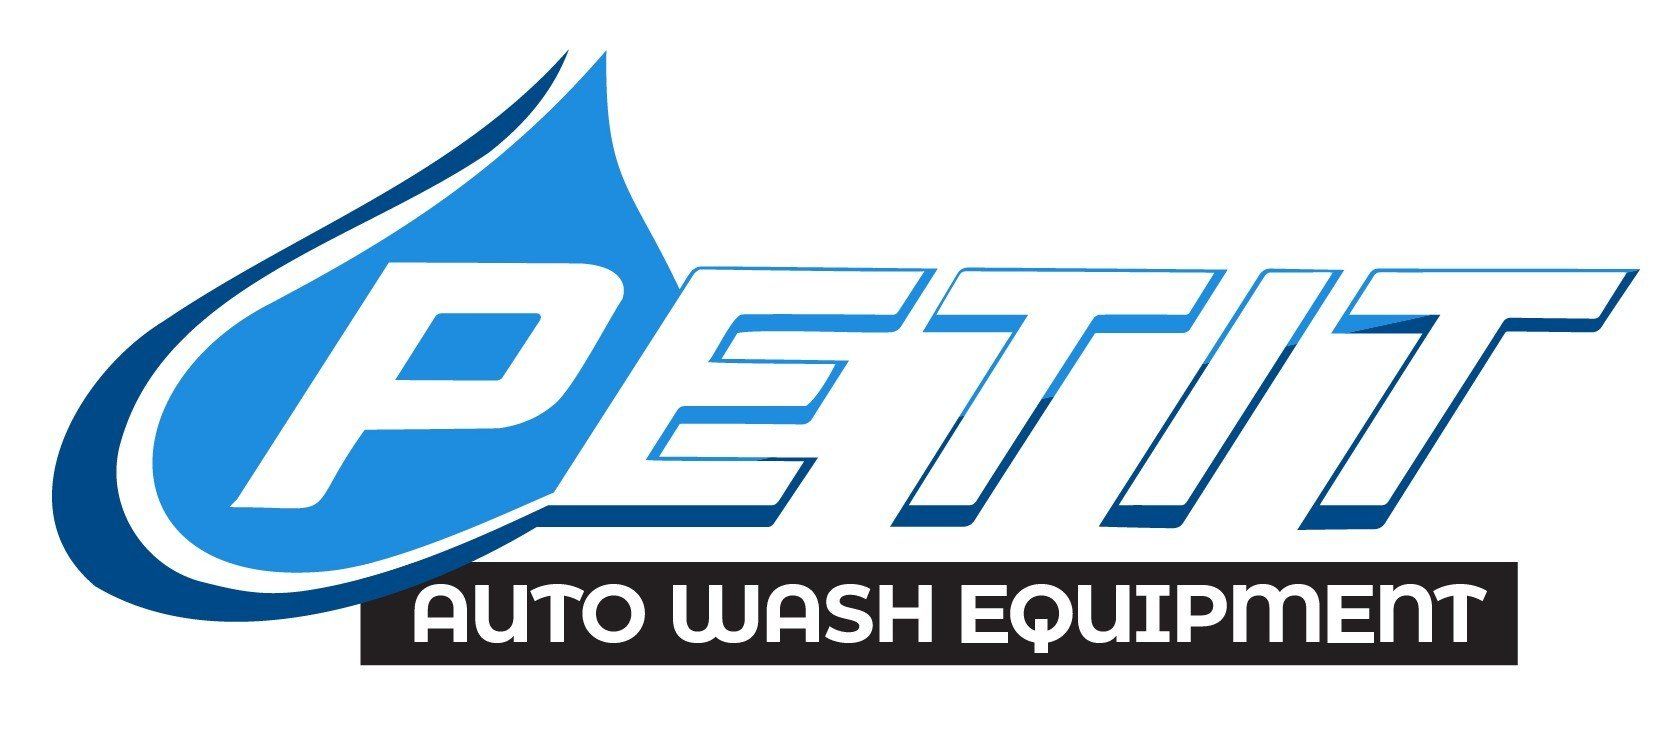 Petit auto wash equipment new logo